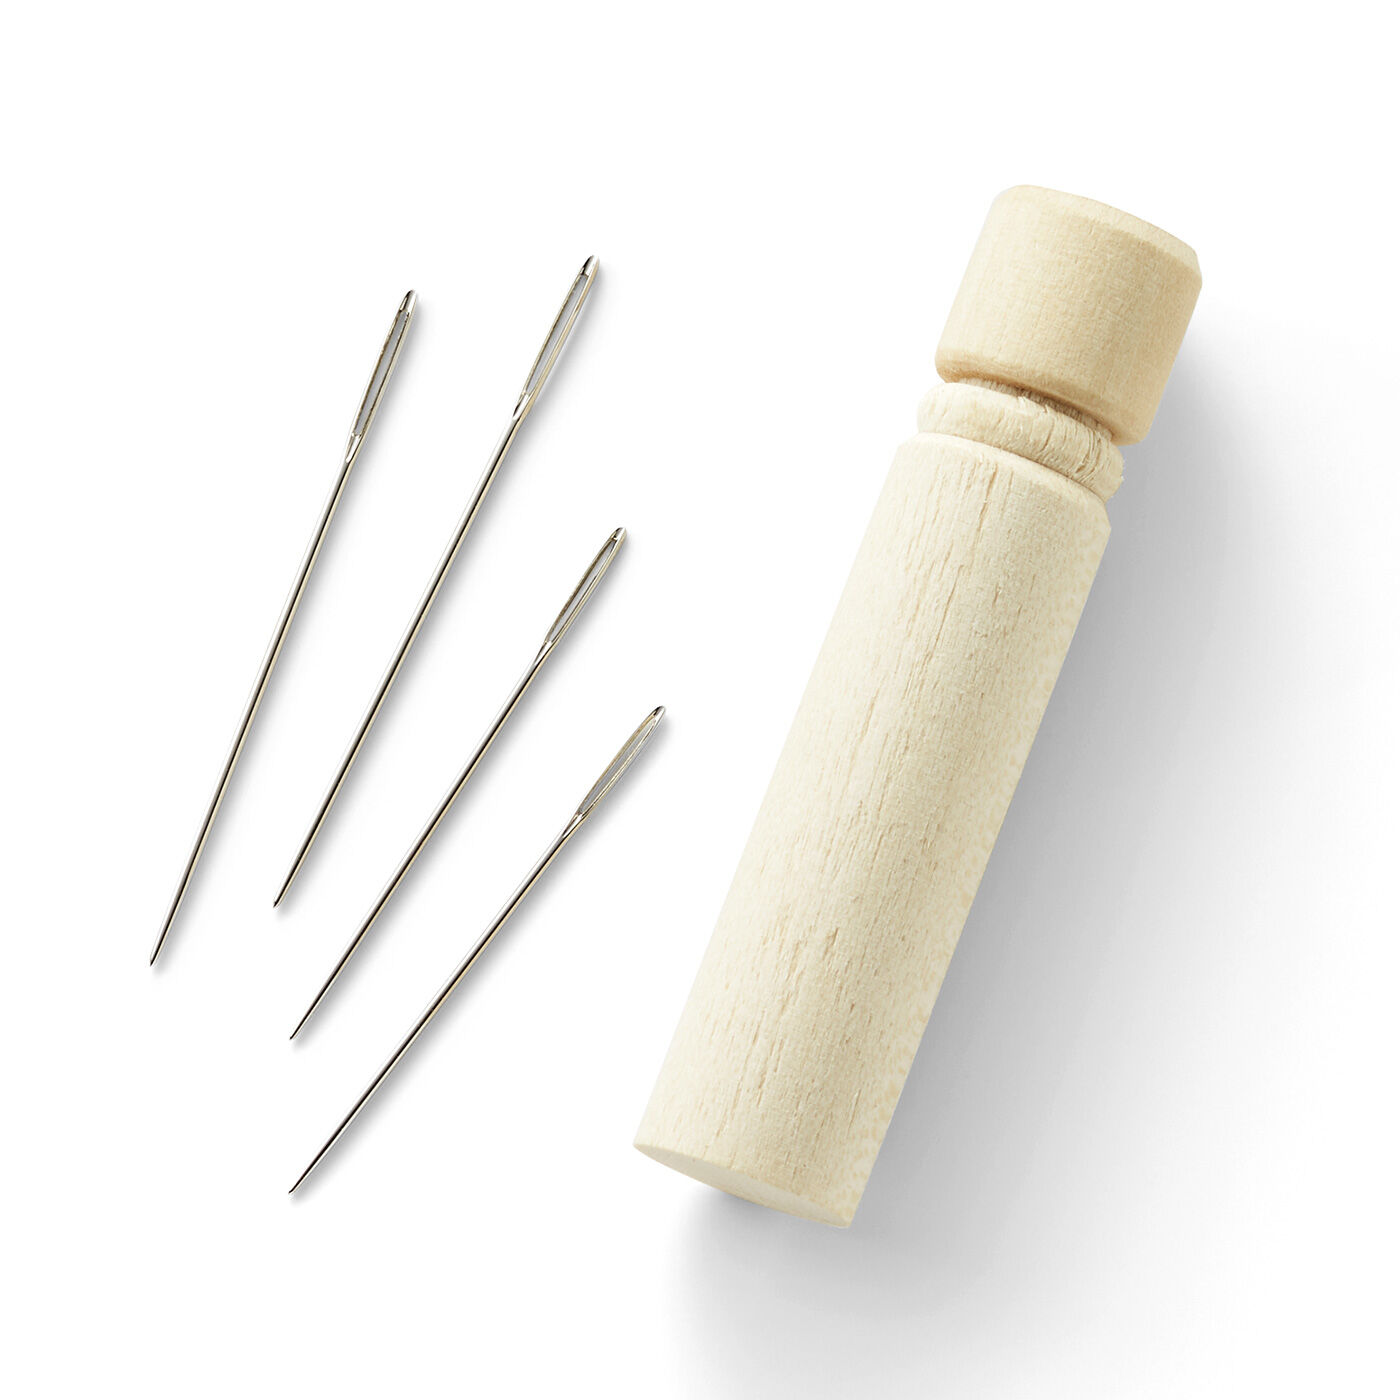 Couturier|木筒に入った カウントスレッドタイプ用刺しゅう針セット